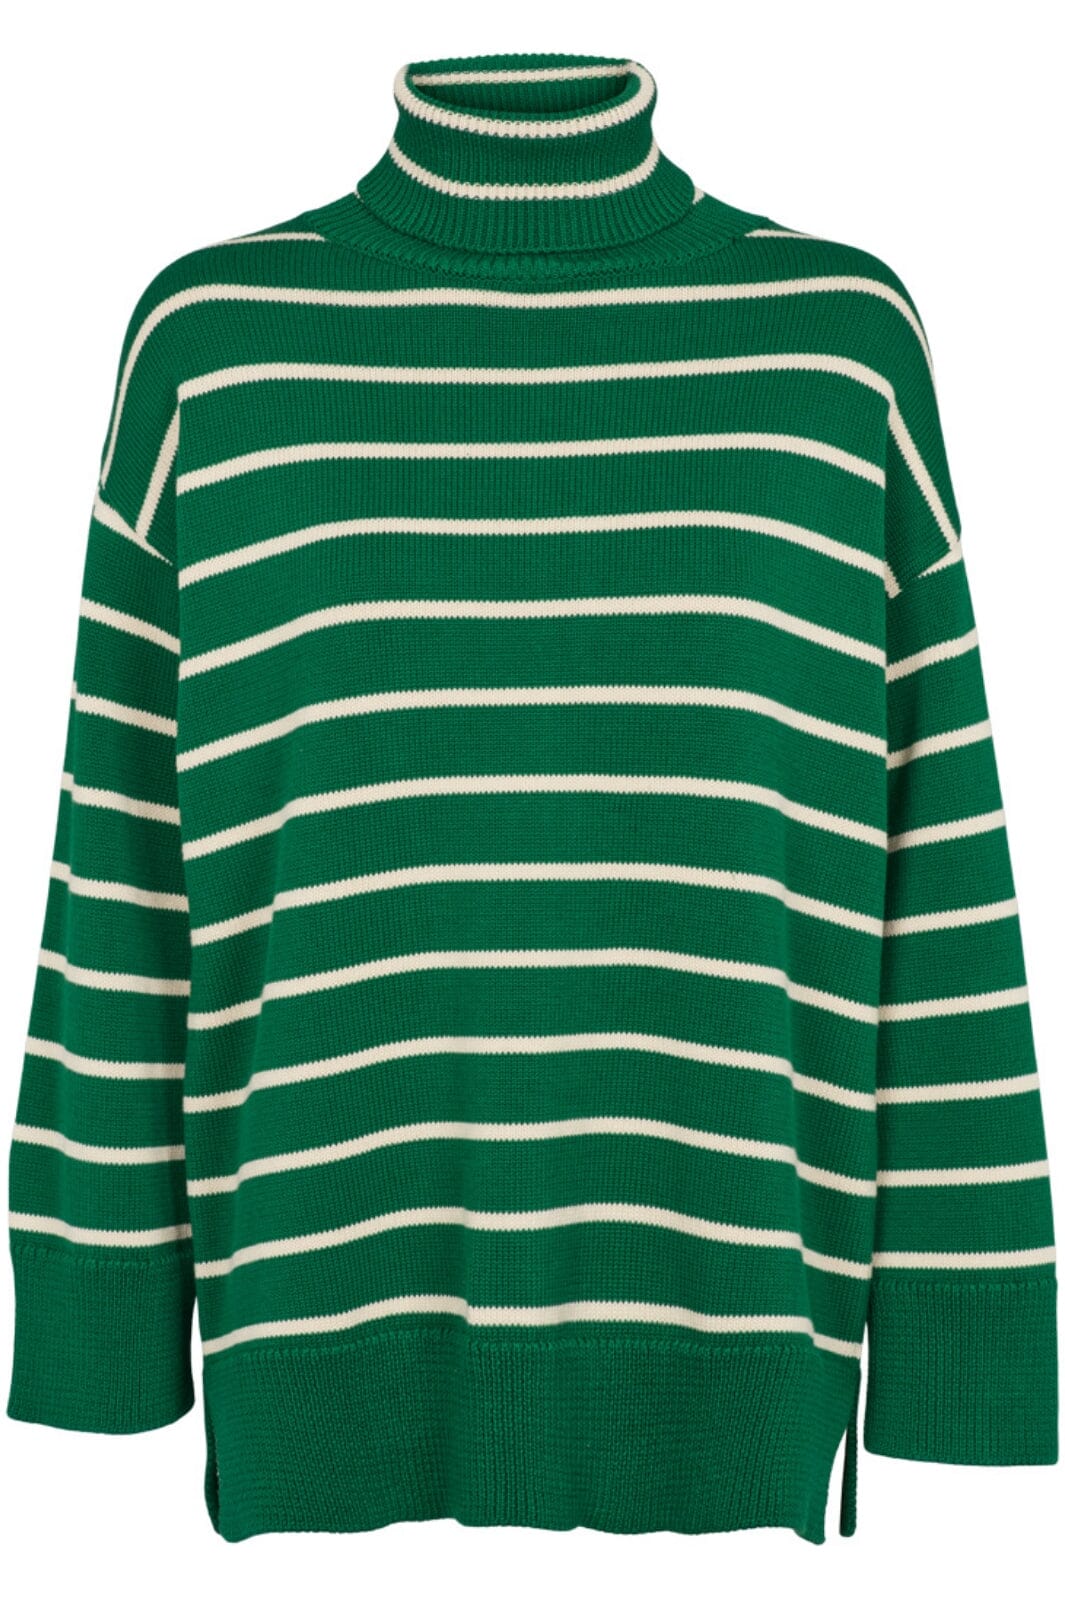 Basic Apparel - Winie T-Sweater - 656 Green Jacket / Birch Strikbluser 